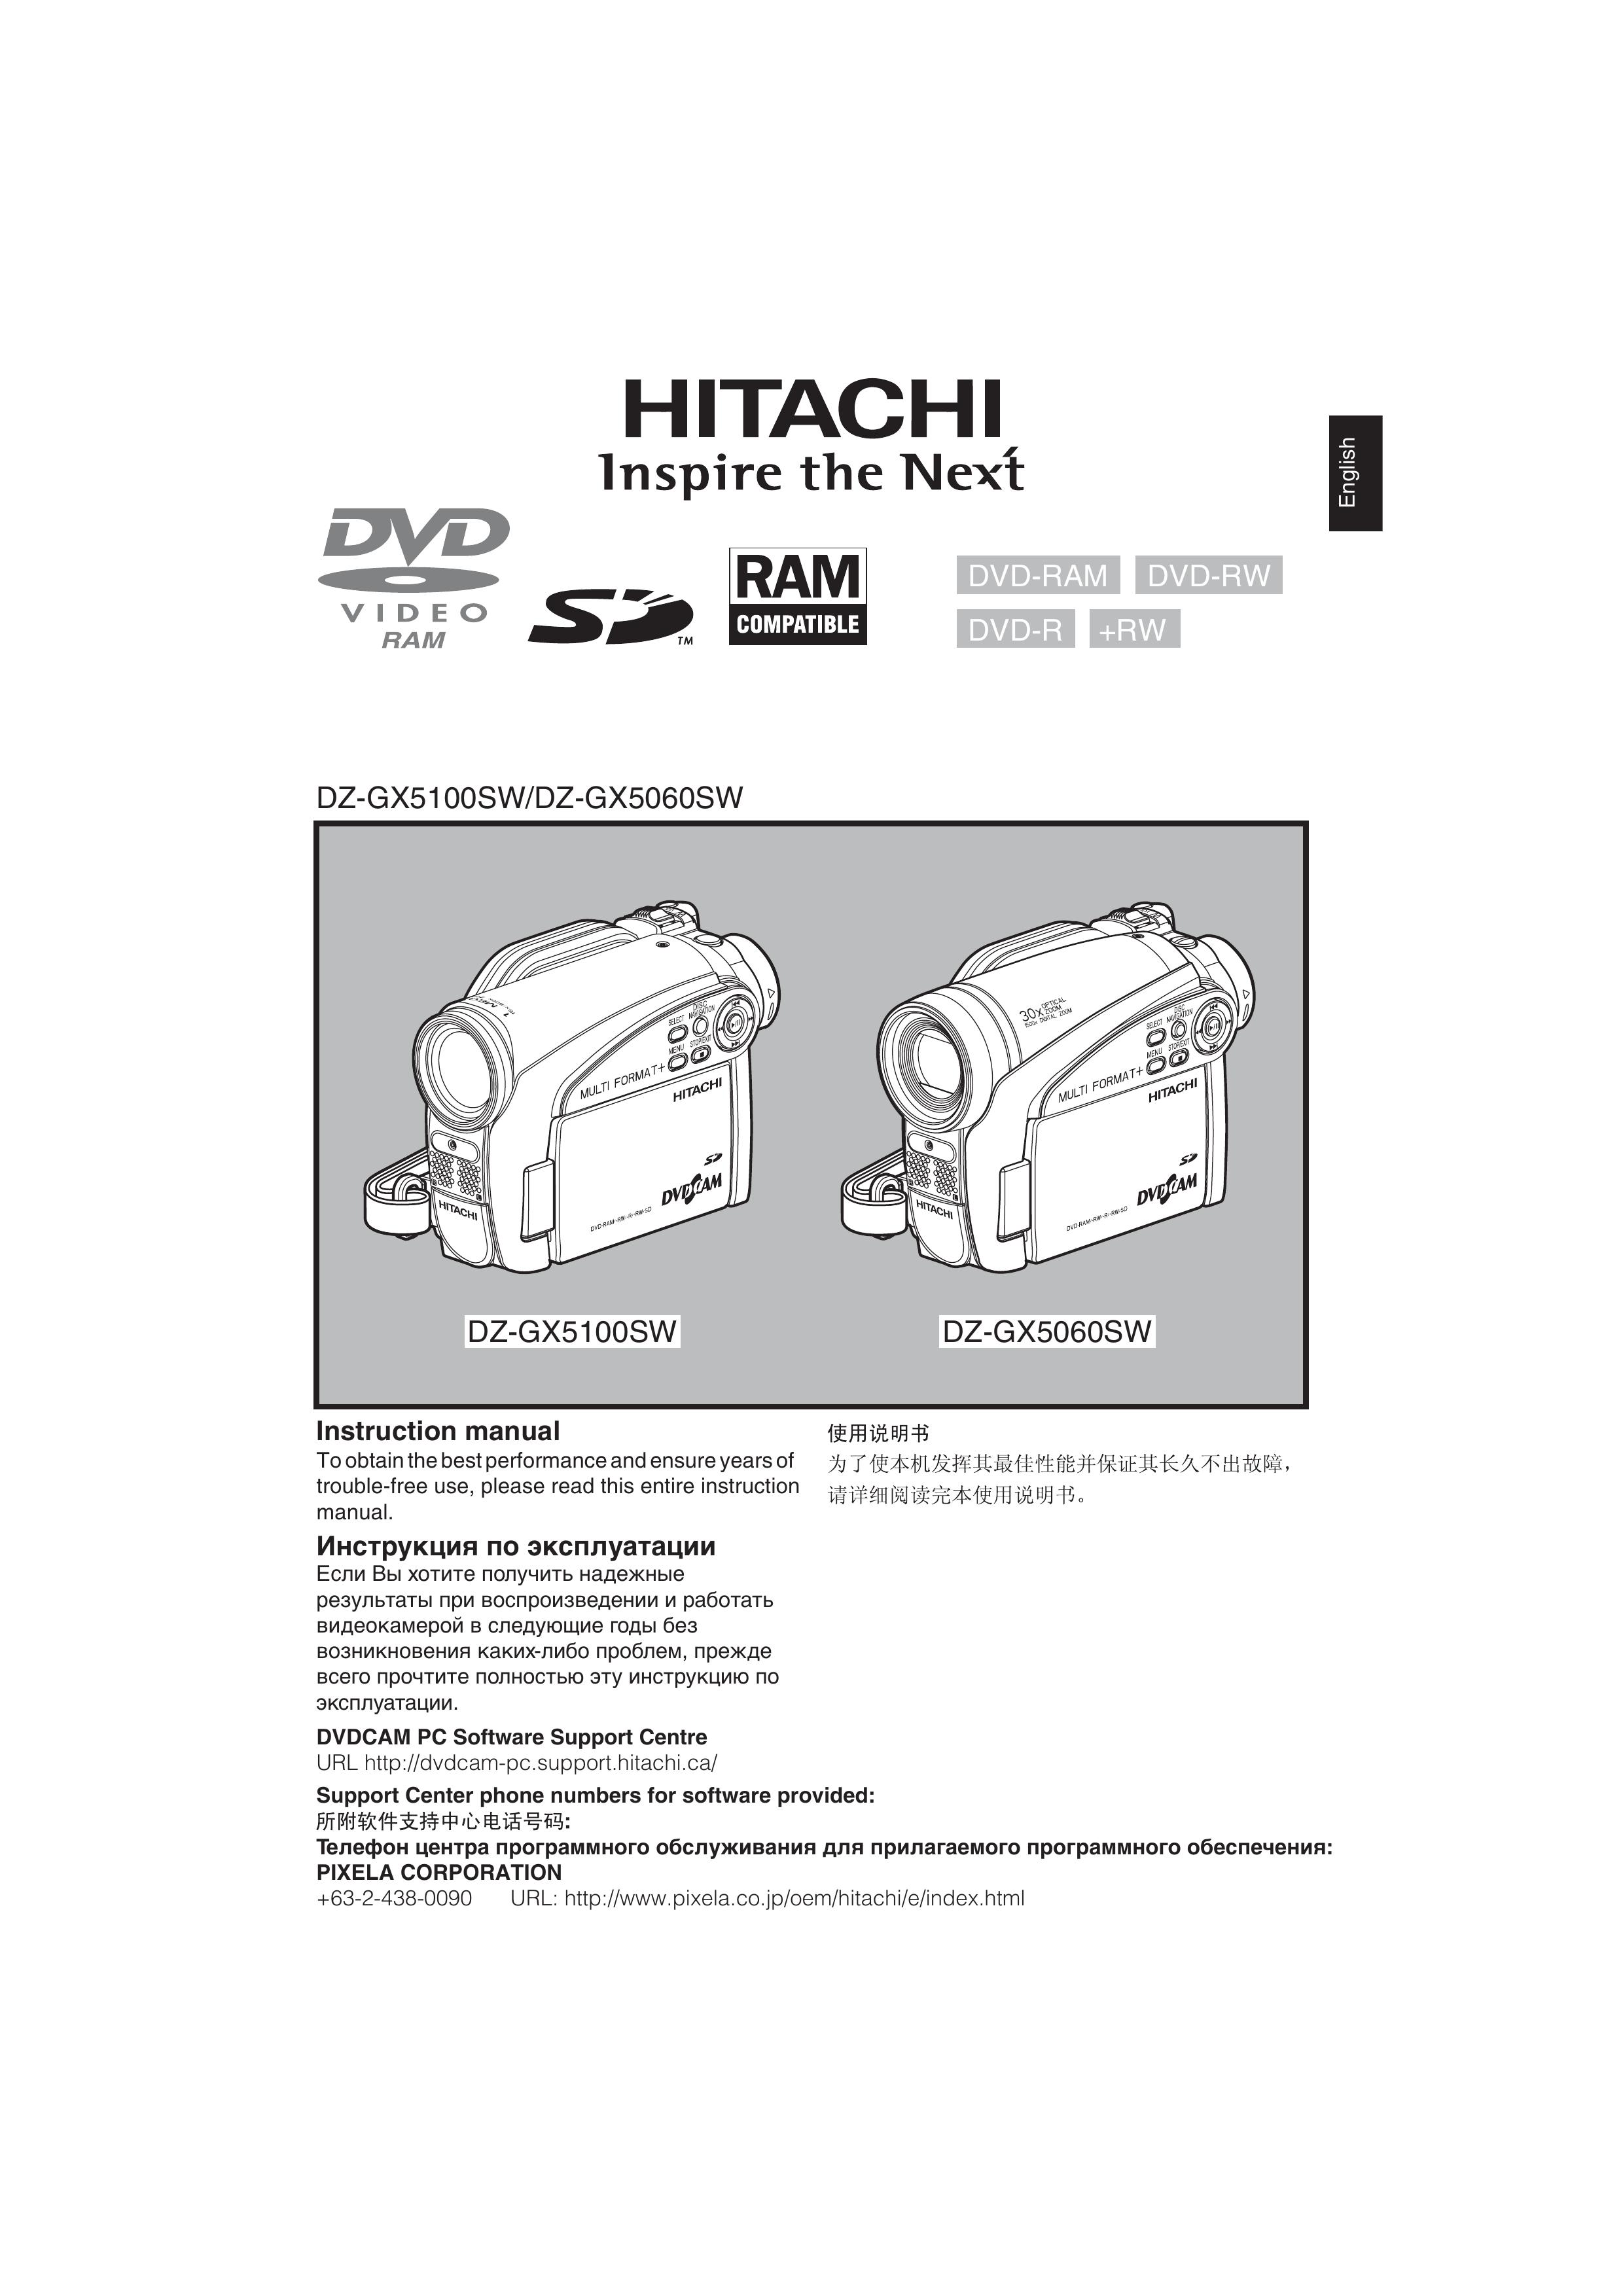 Hitachi DZ-GX5100SW Camcorder User Manual